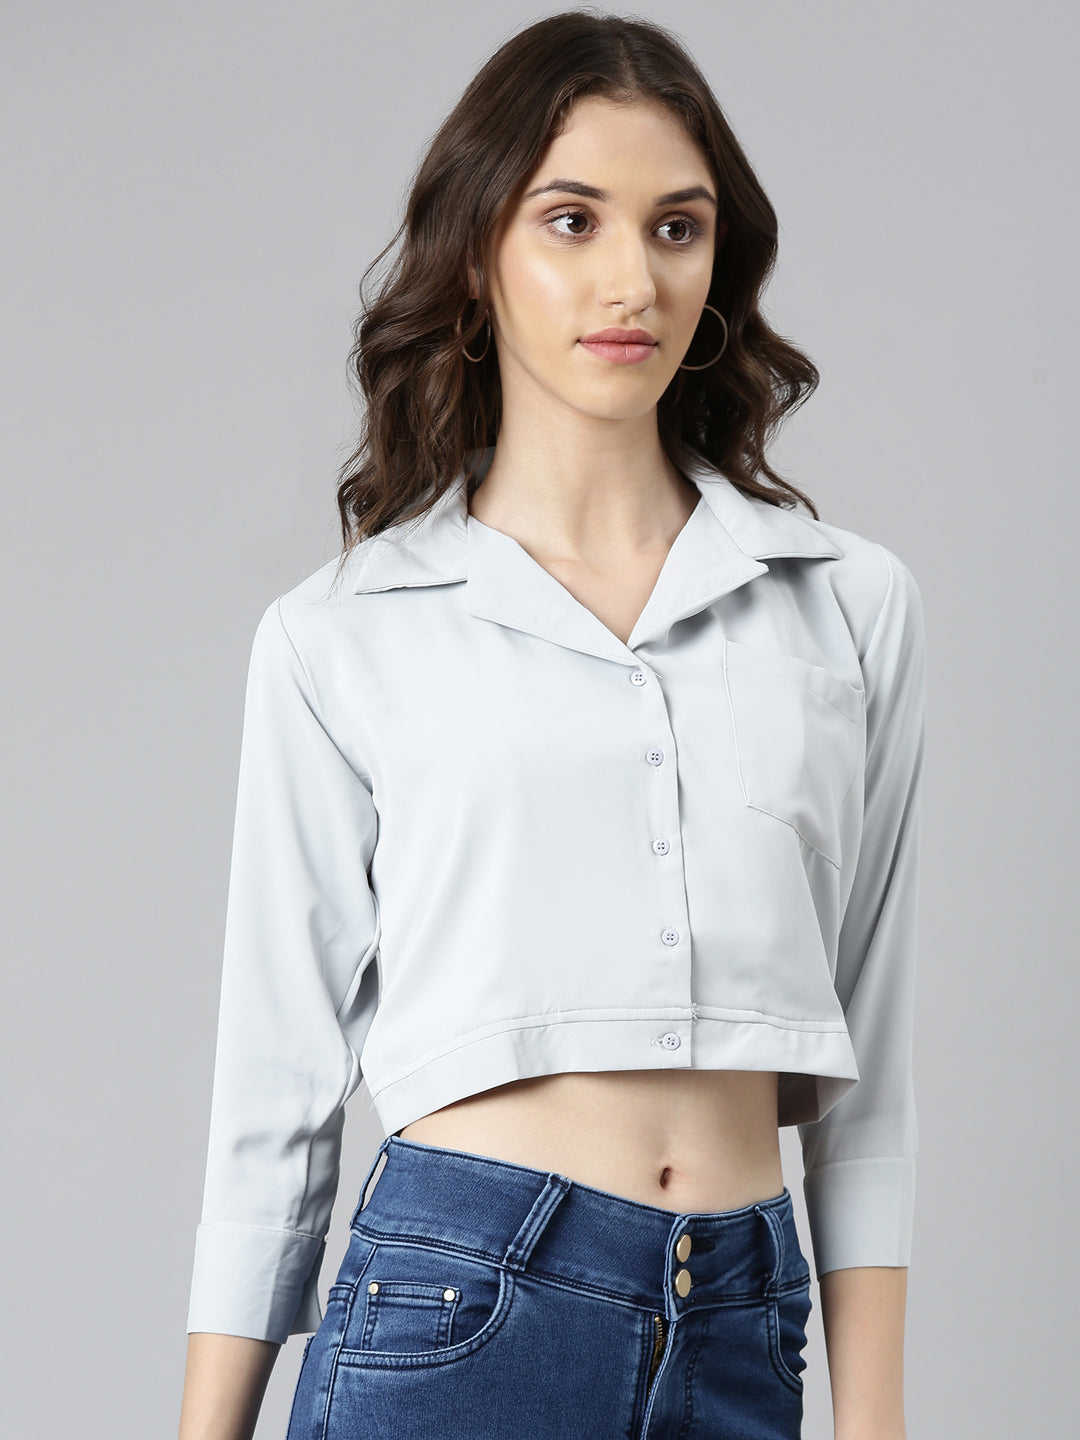 Women Grey Solid Shirt StyleCrop Top